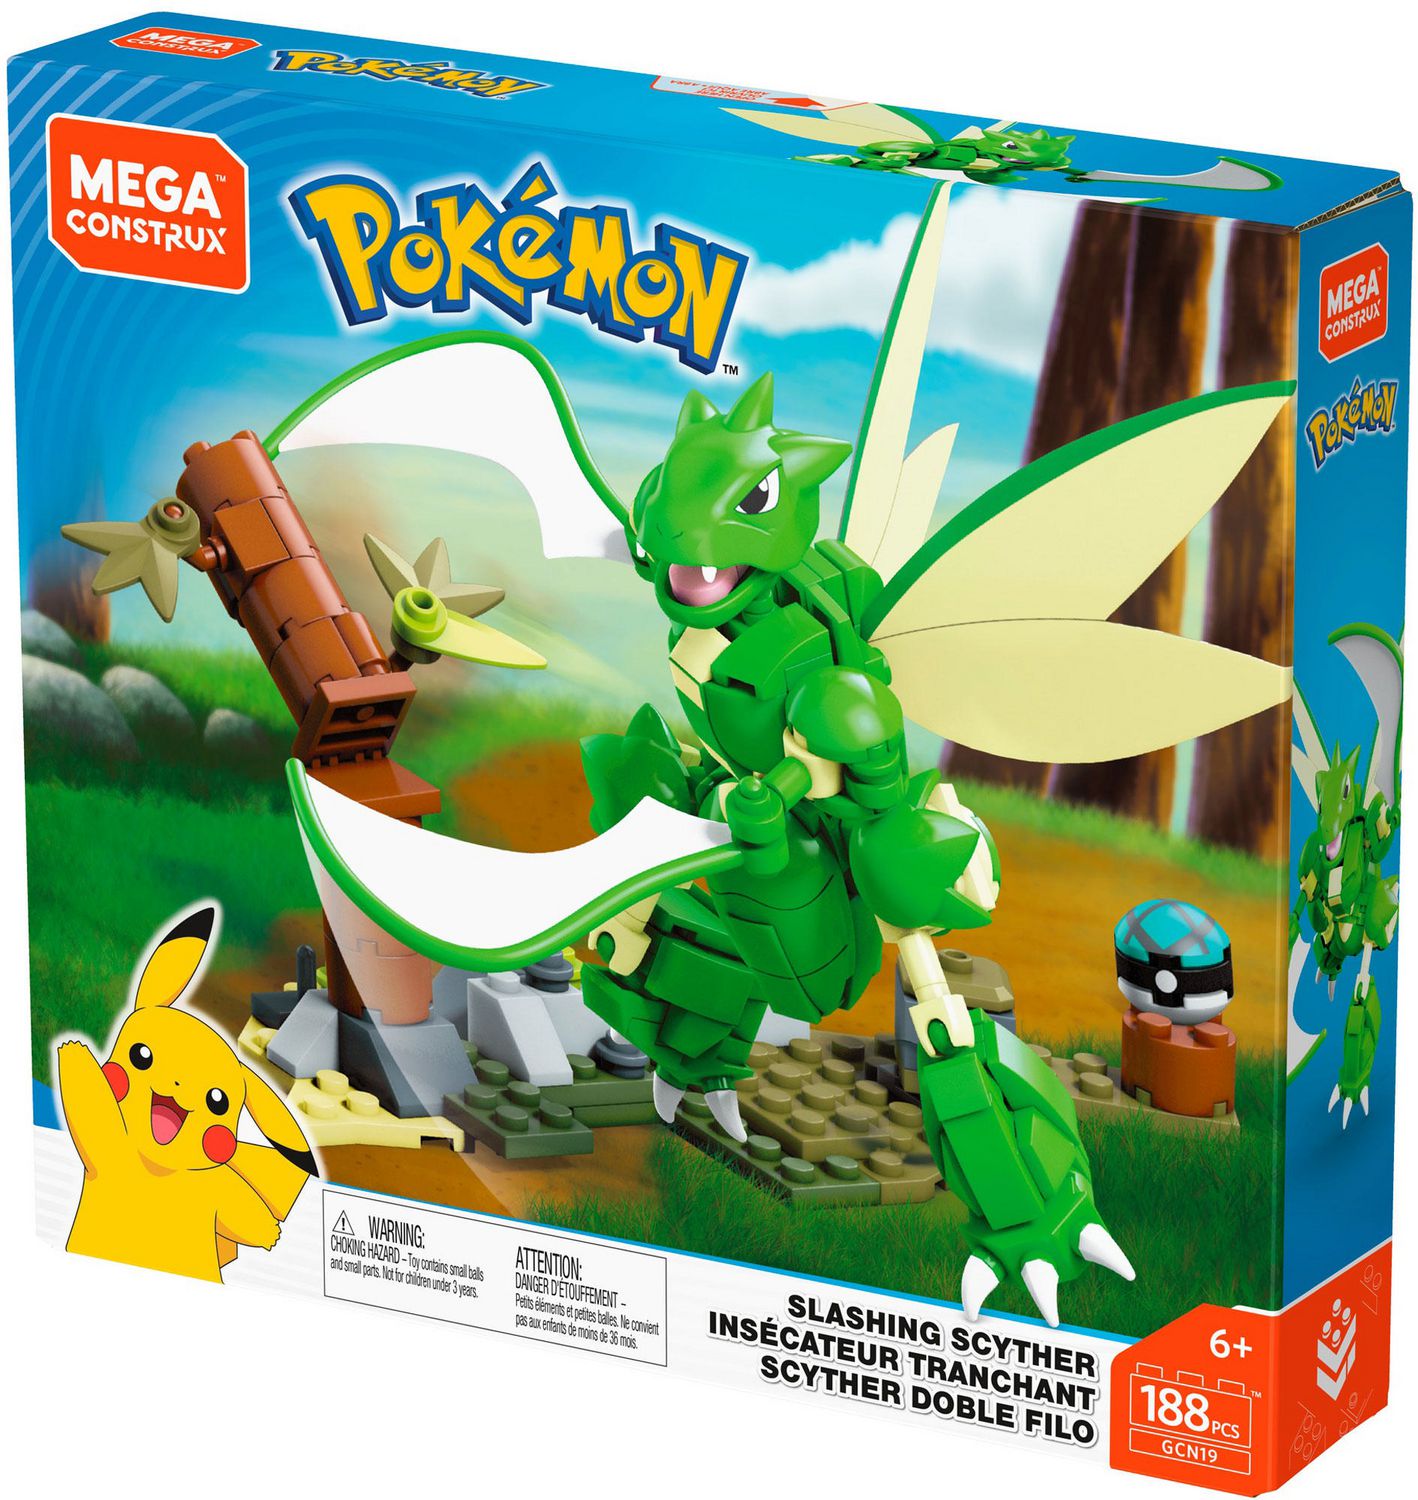 MEGA Construx Pokemon Slashing Scyther Set GCN19 188 Pcs for sale online 